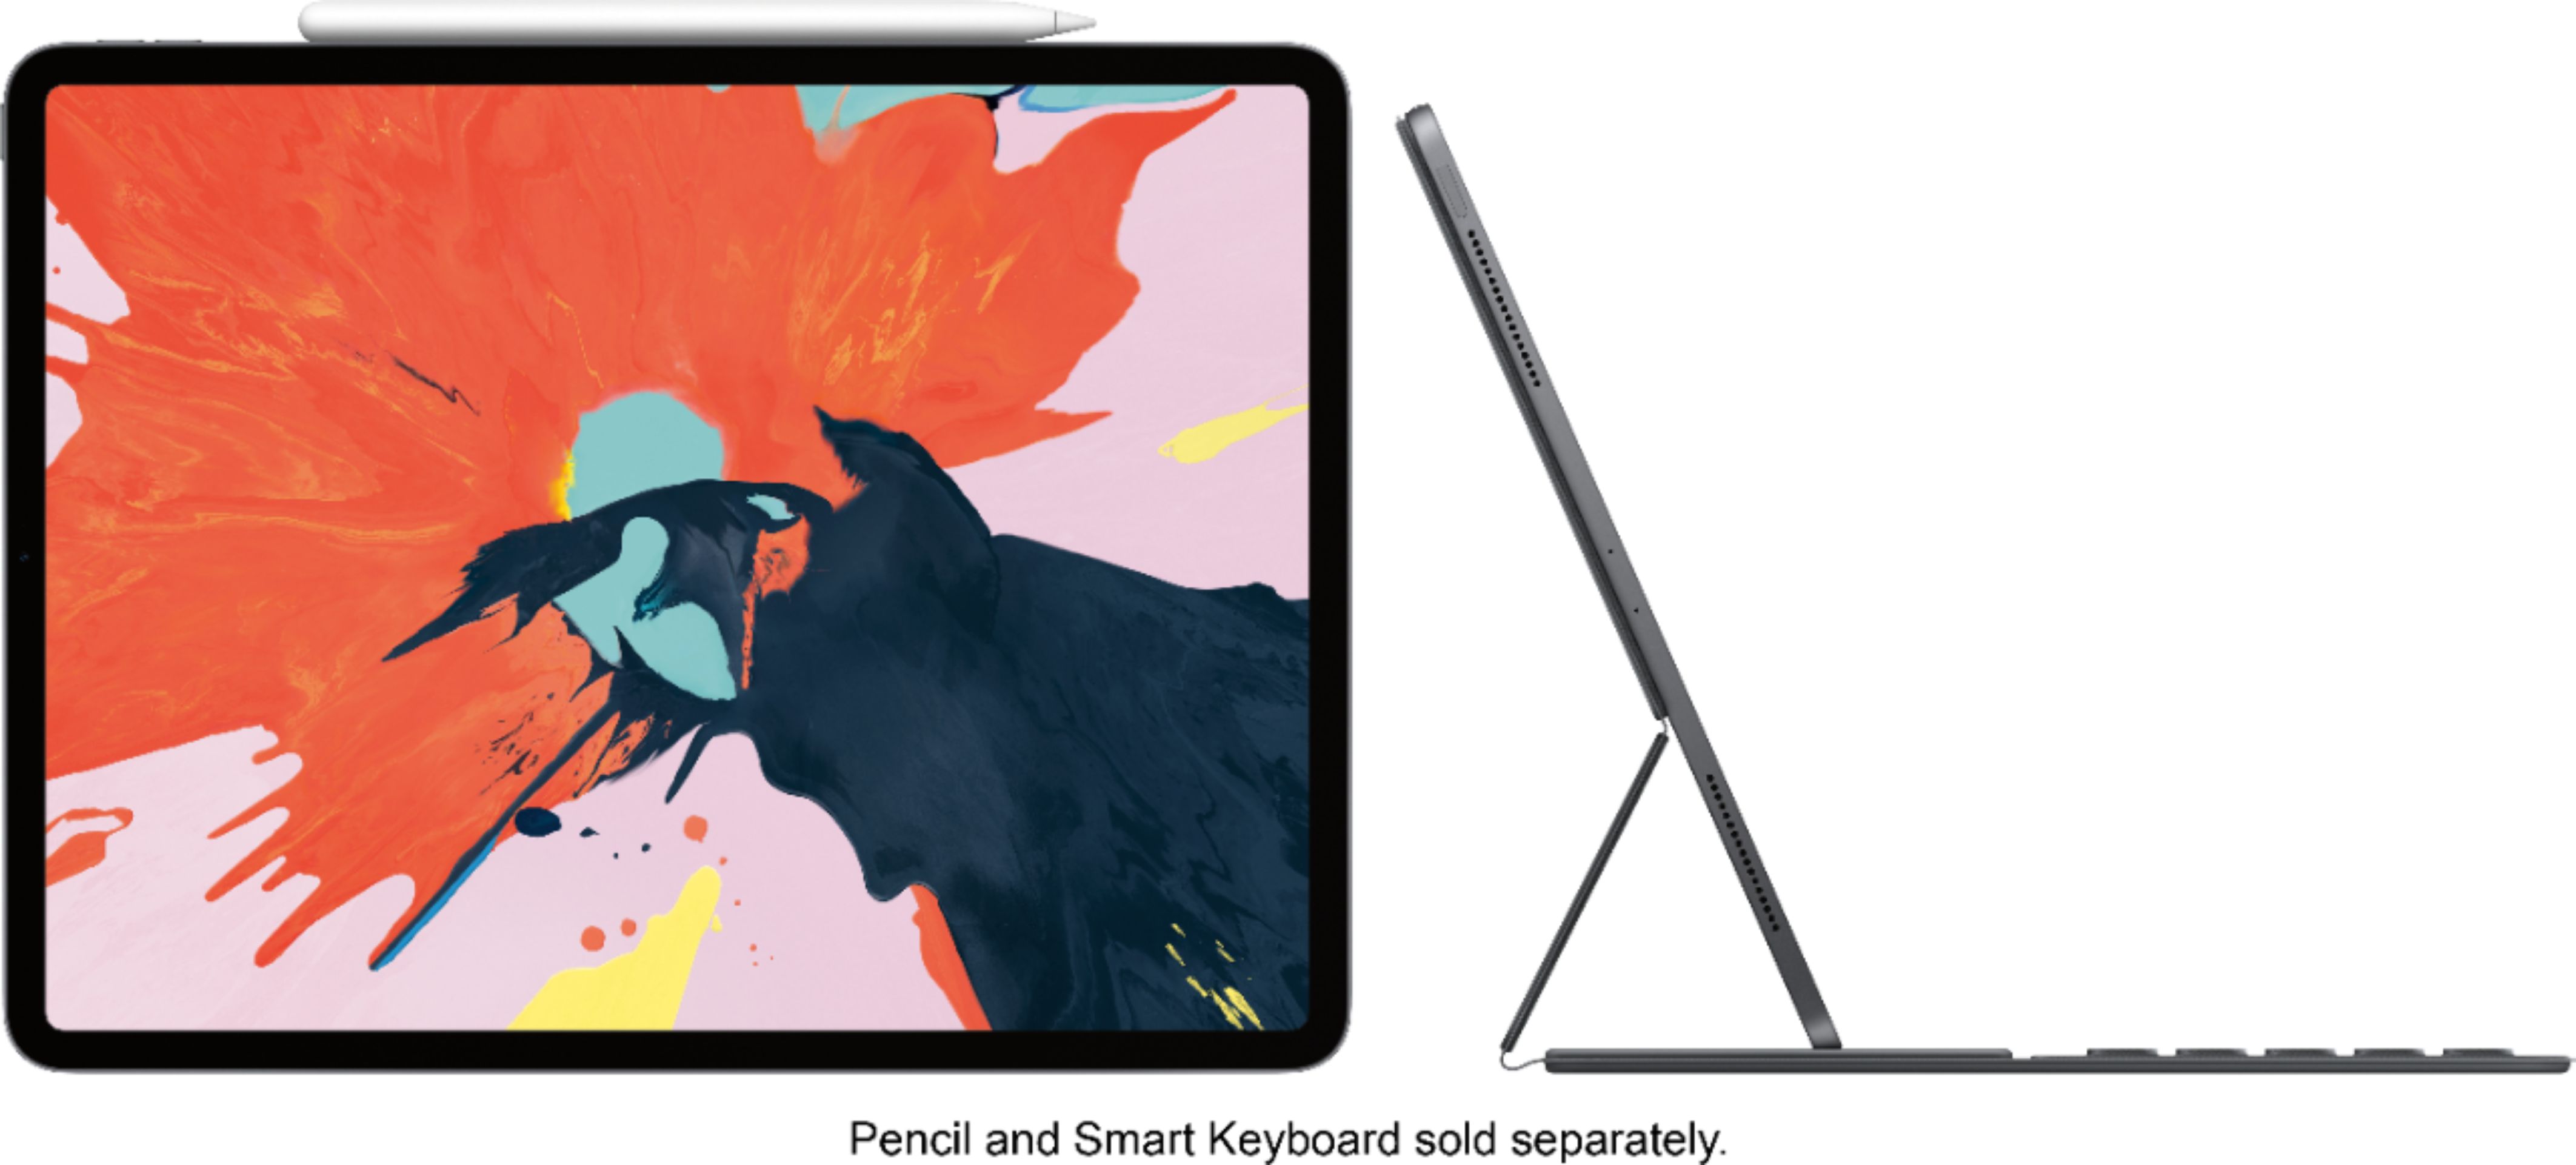 What does a Best Buy Certified Open Box iPad Pro Look Like? 